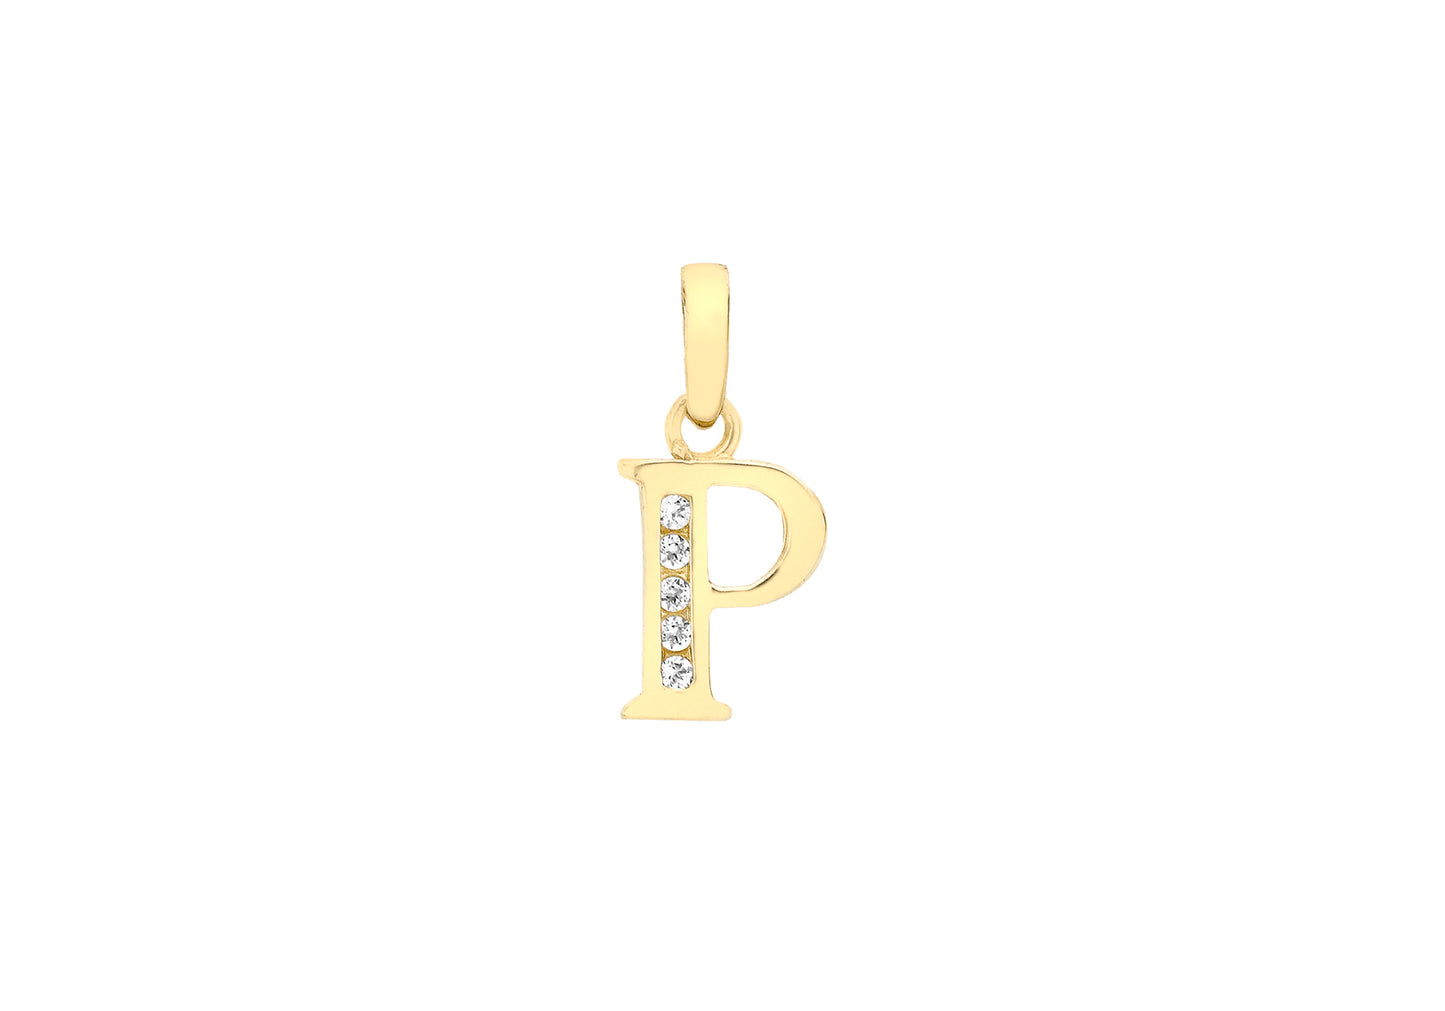 9ct Yellow Gold Initial "P" CZ Pendant